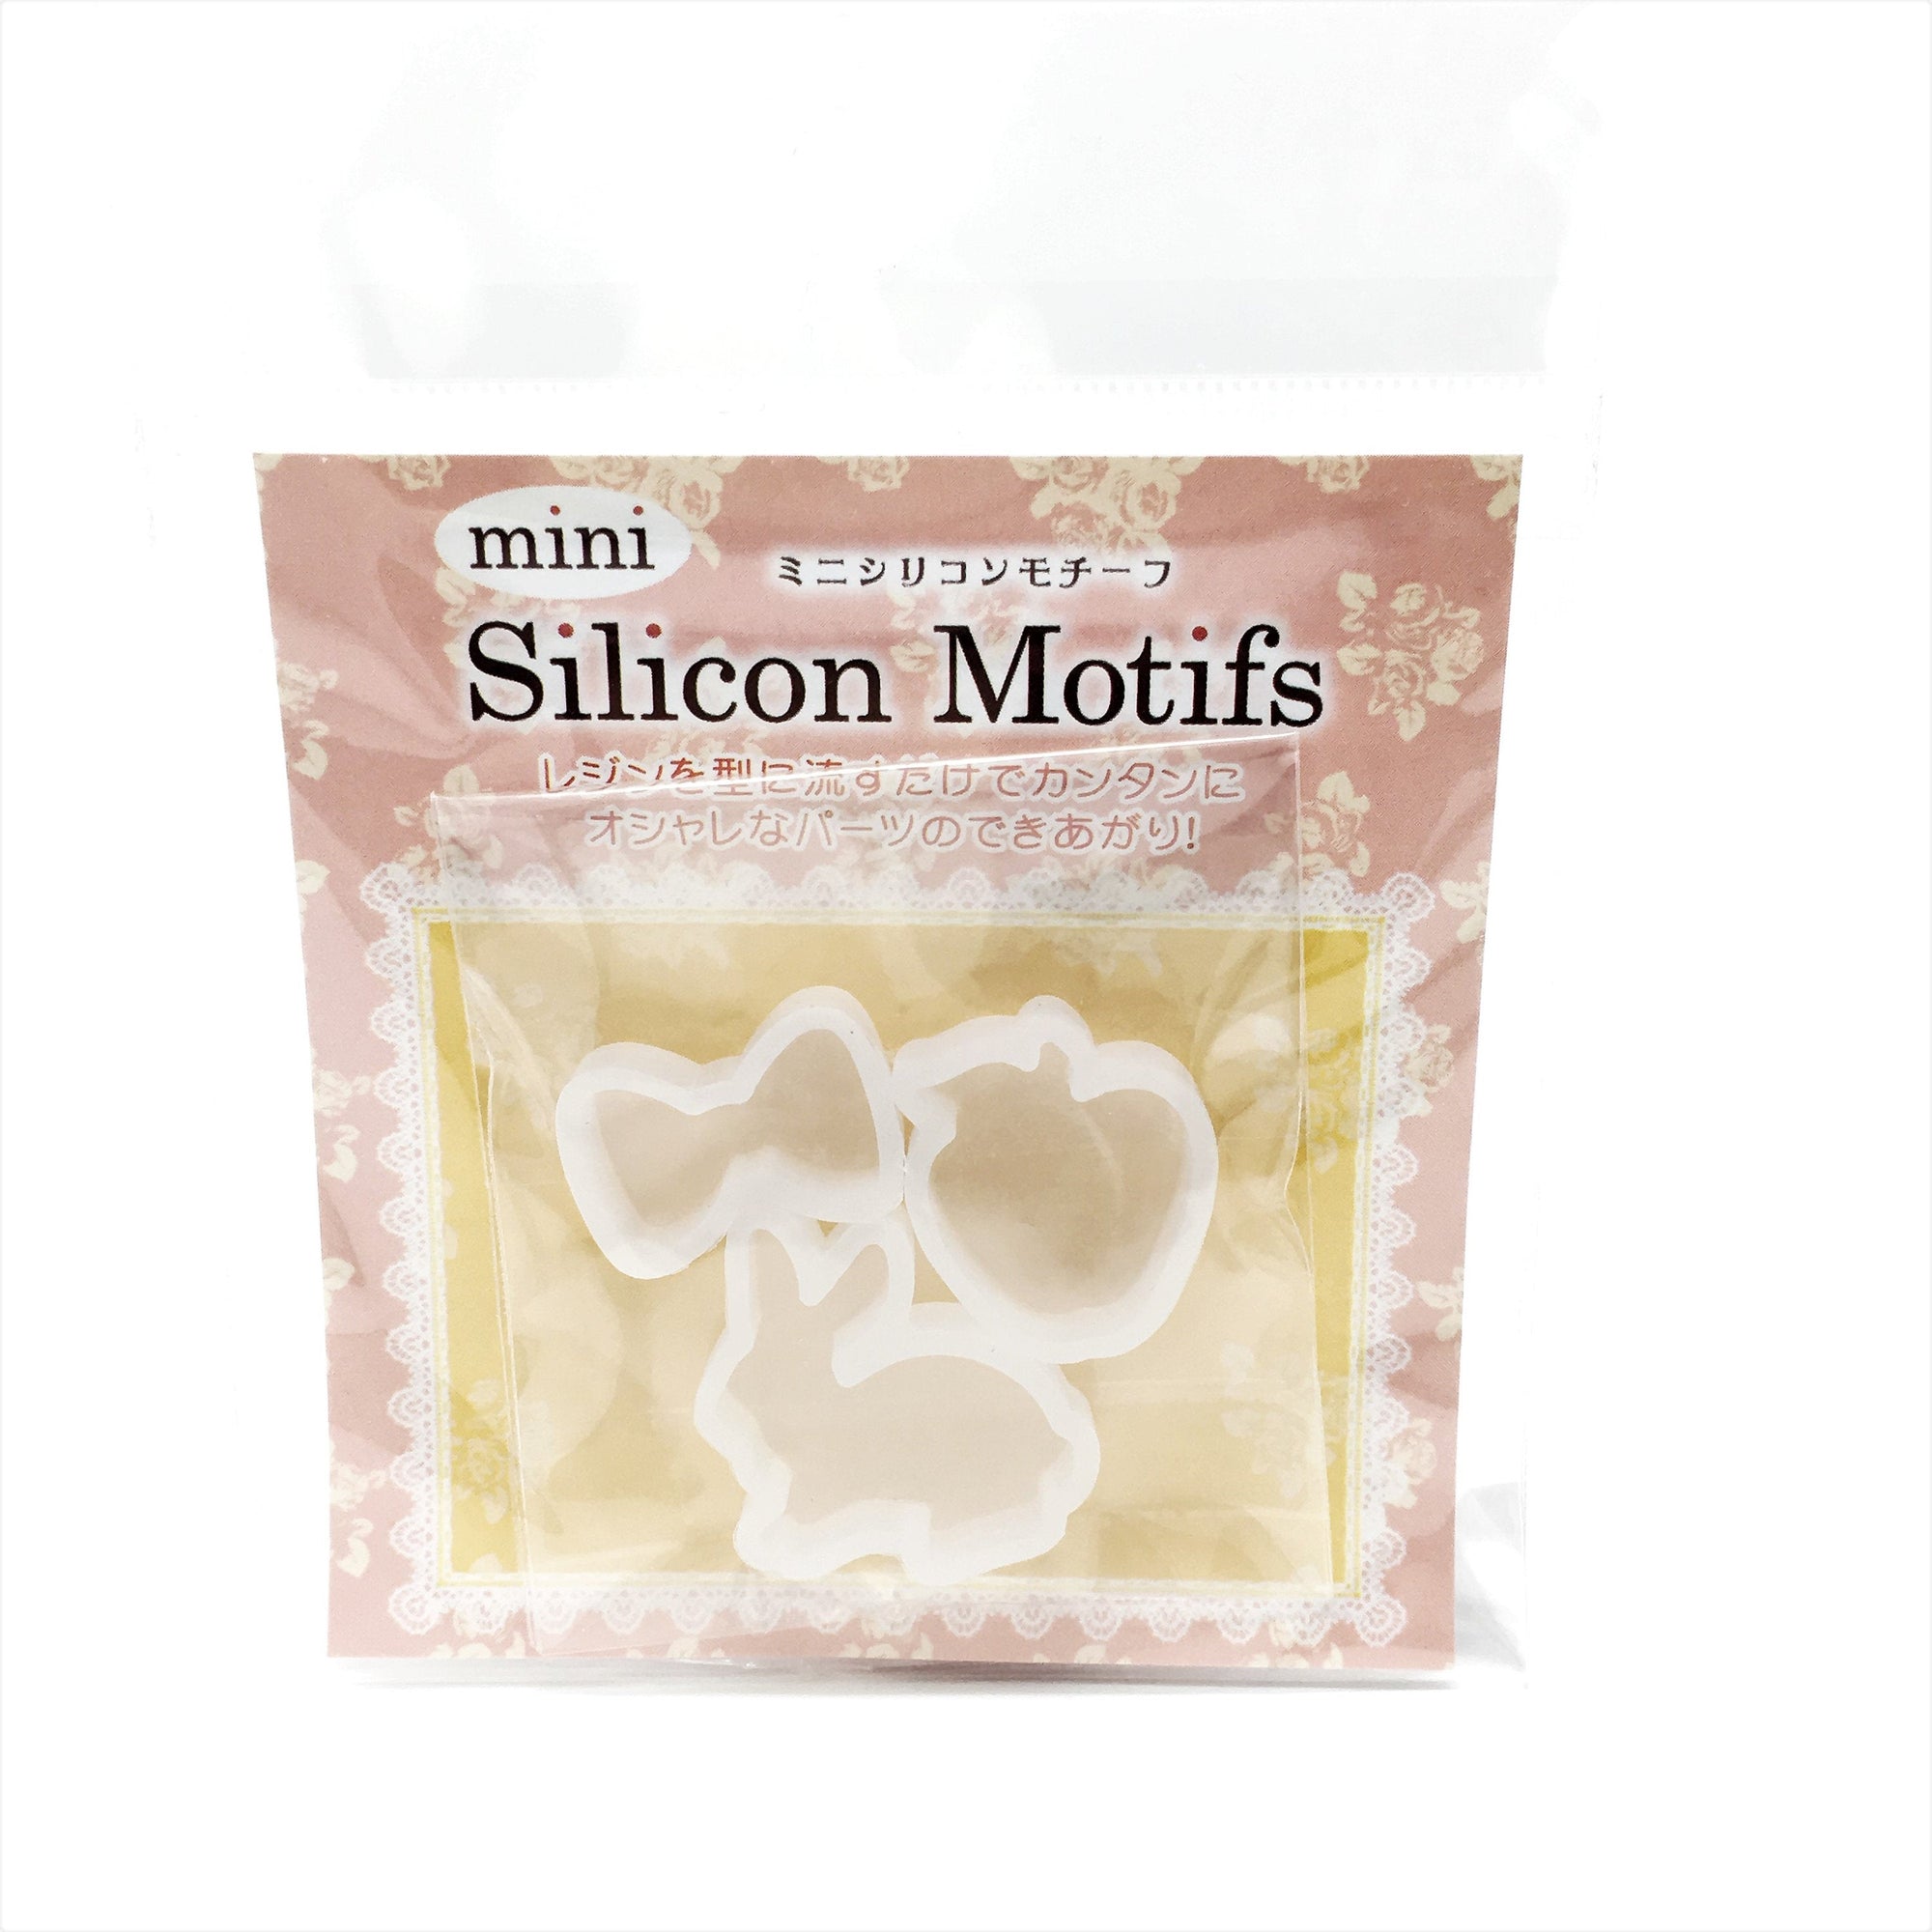 Resin Silicone Motifs Soft Mold Mini - Bow, Apple, Rabbit